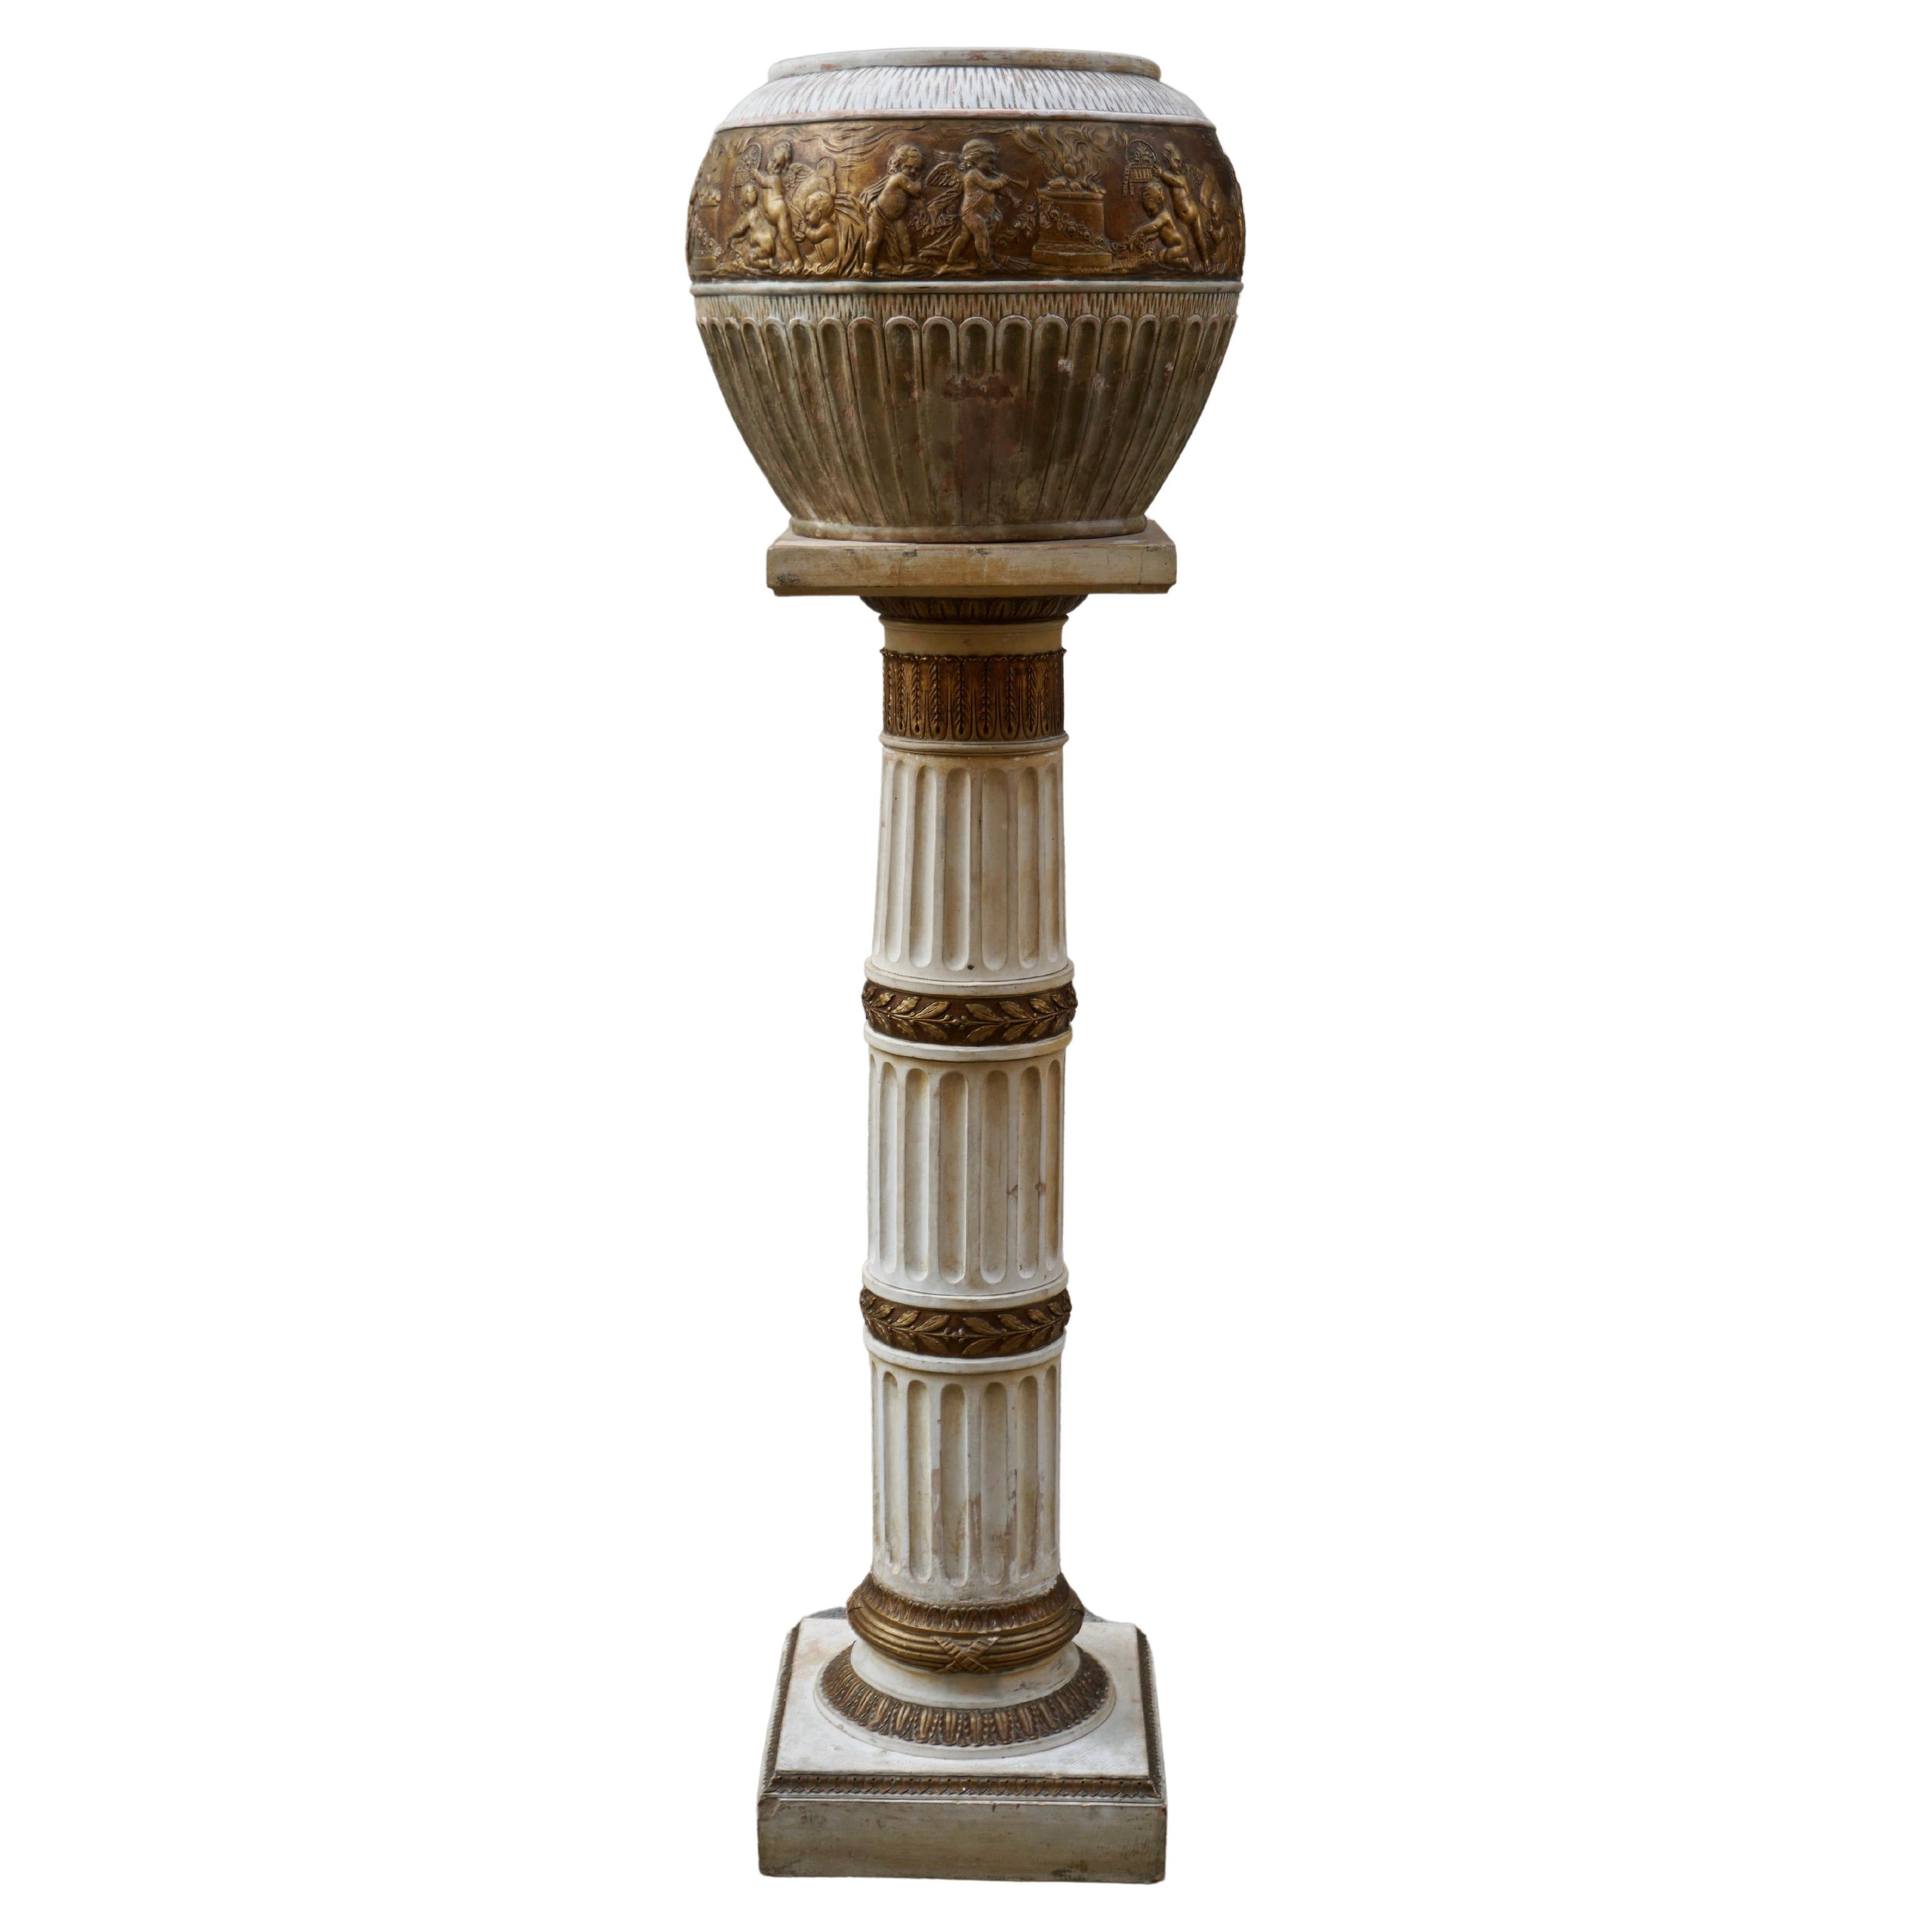  Ornate Pedestal Terracotta Cherub Planter Stand For Sale